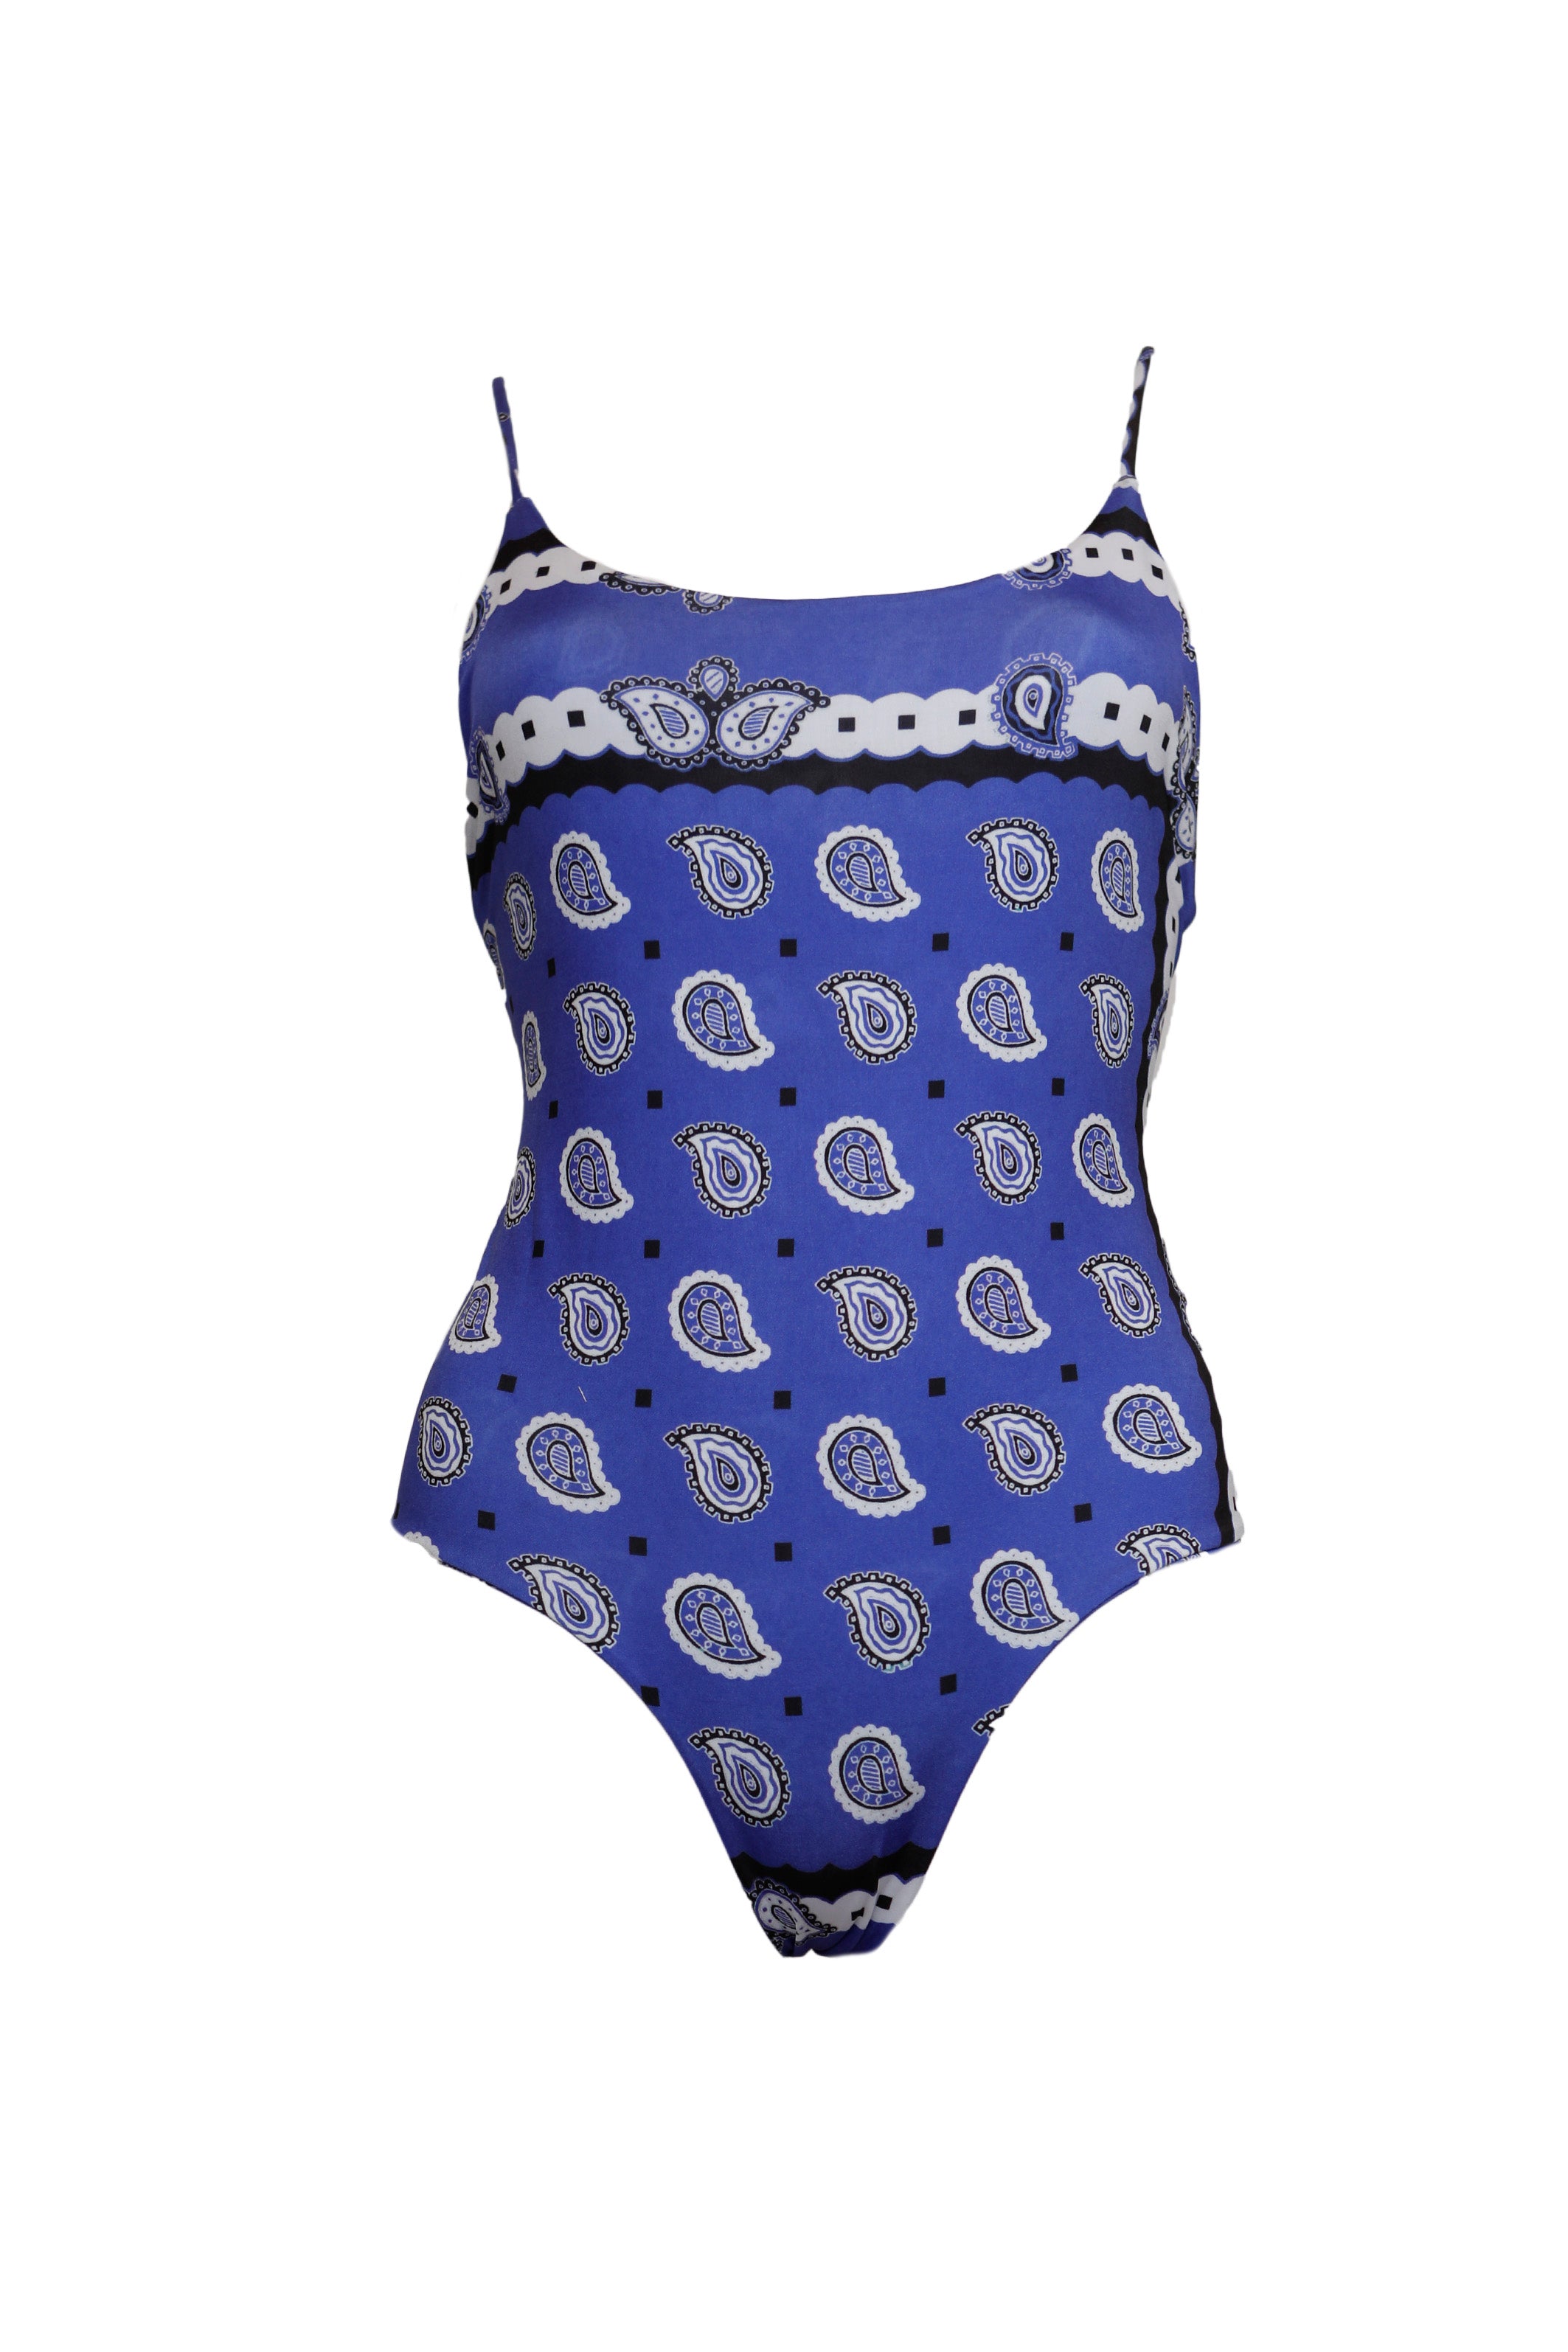 FEDERICA - bodysuit in print bandana ibiza blue lycra